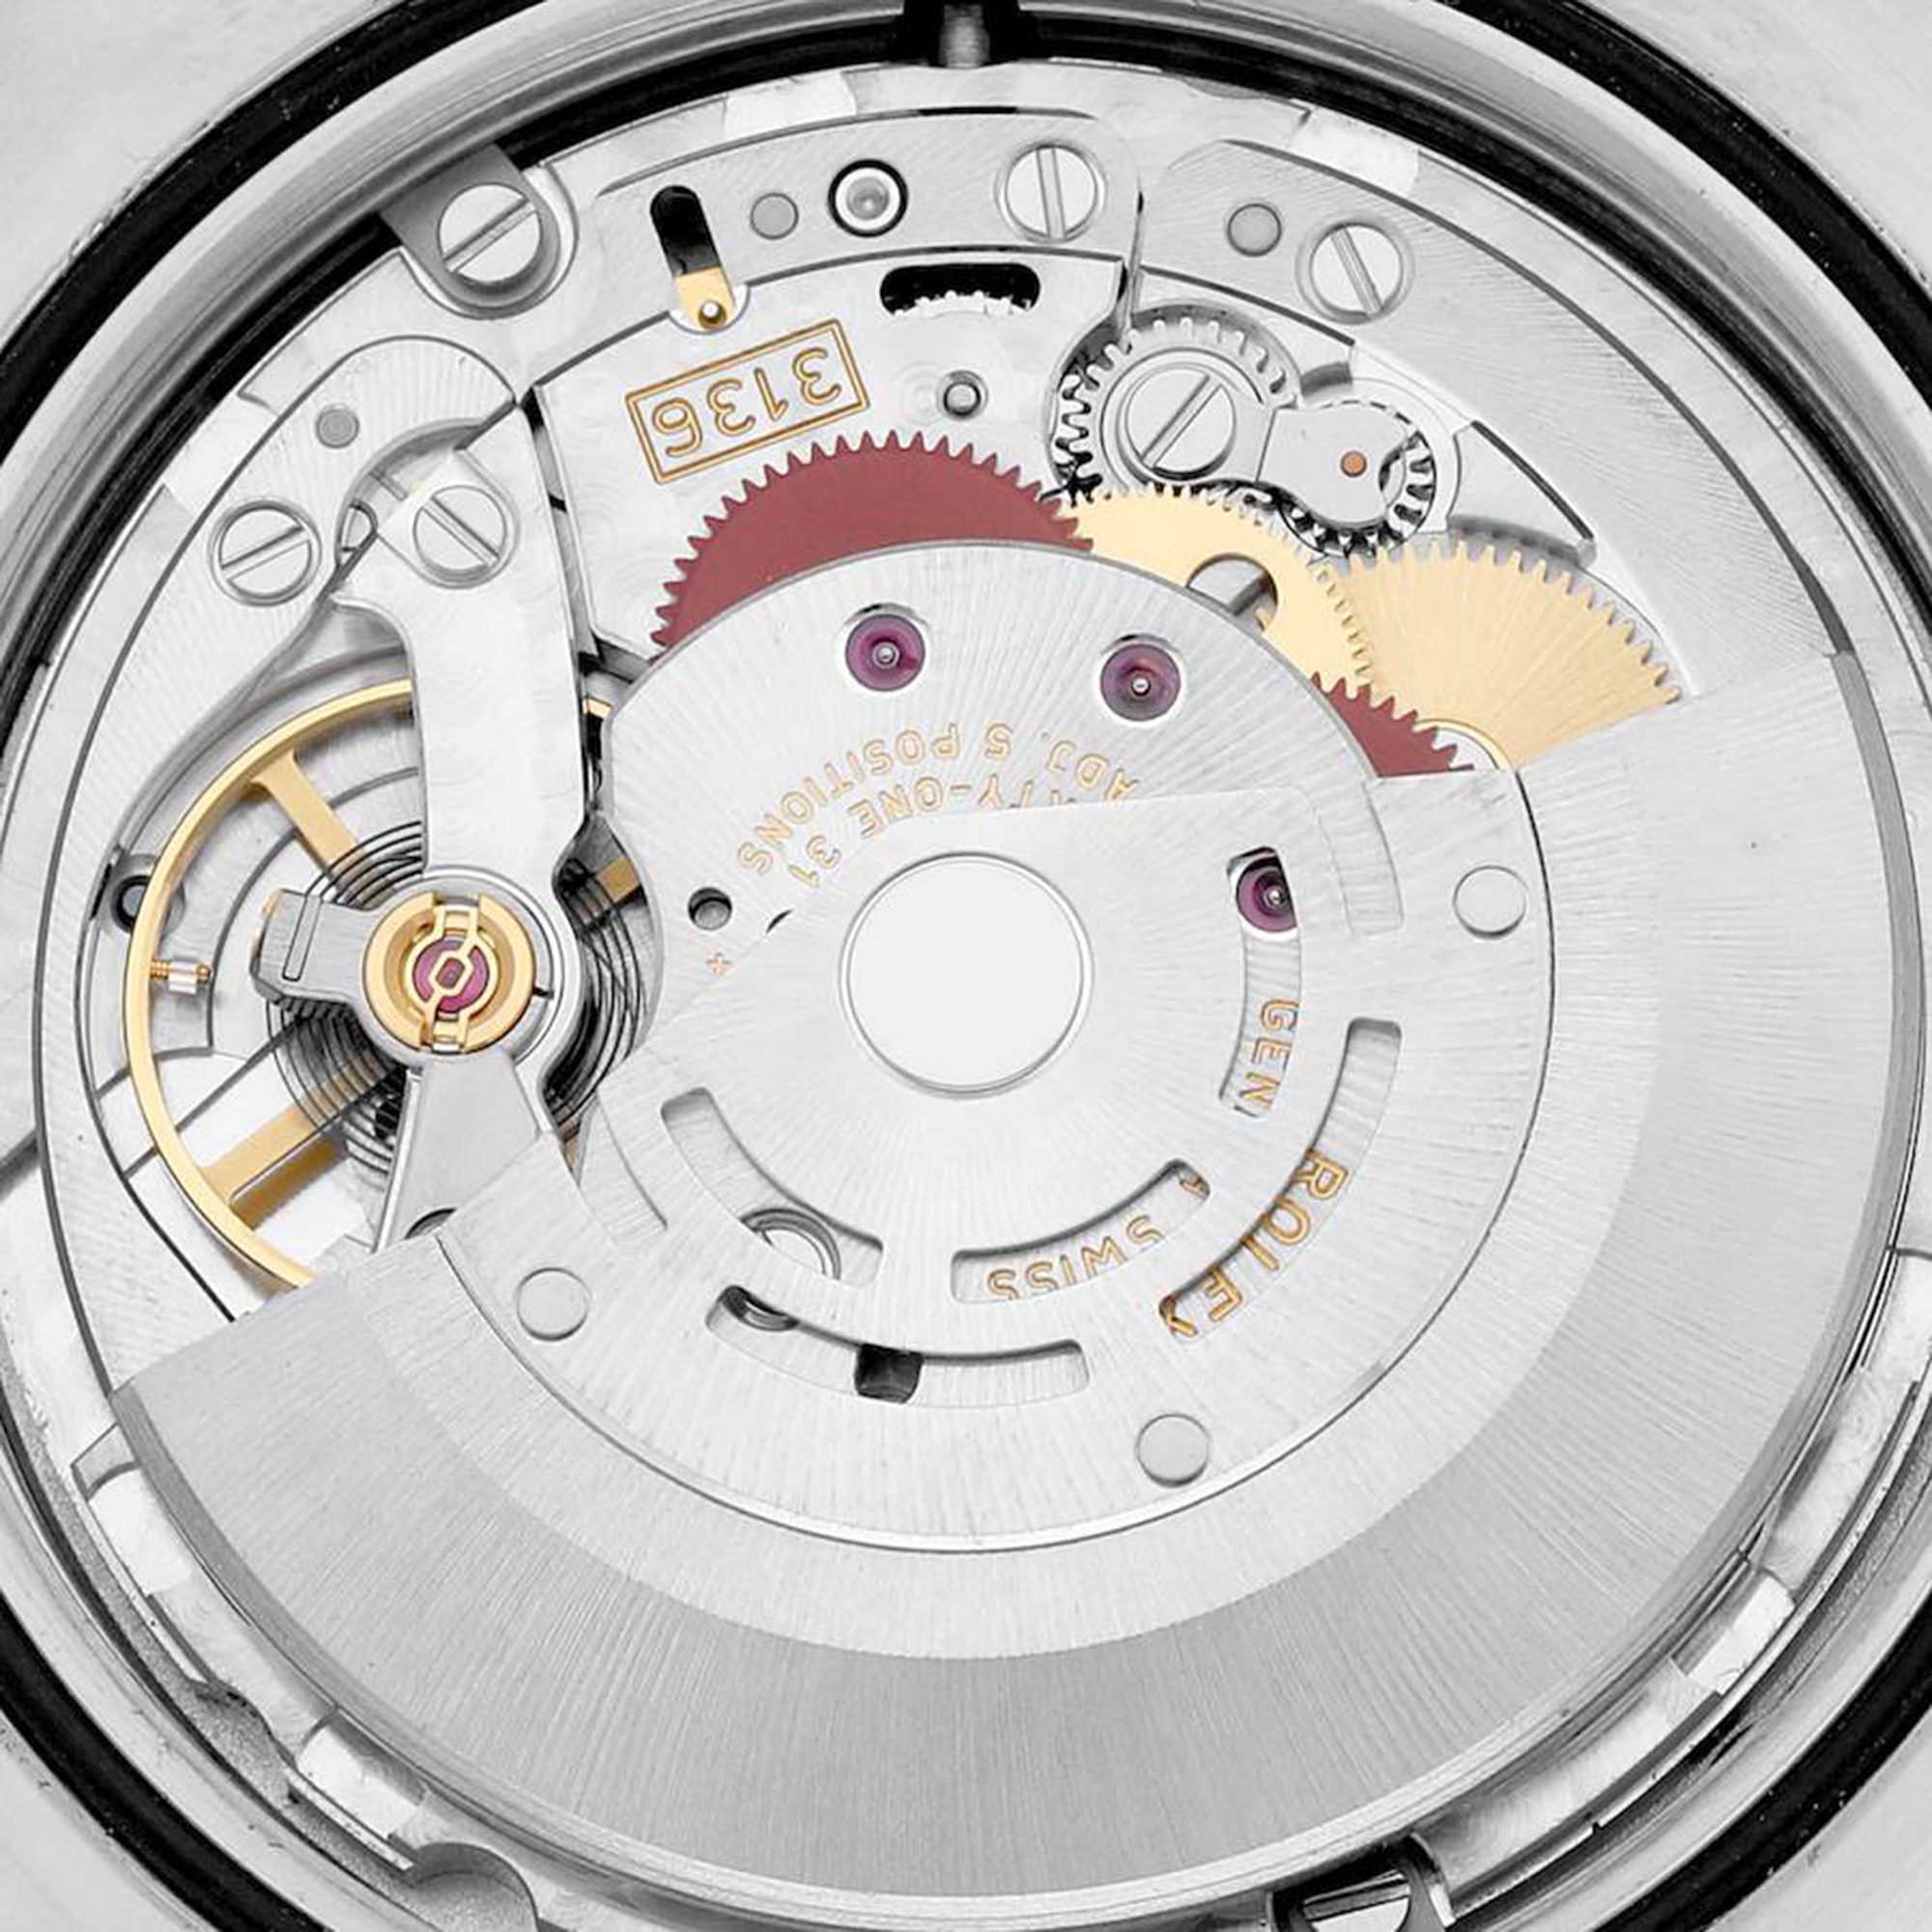 Rolex Datejust II Steel White Gold Blue Roman Dial Men's Watch 116334 41 Mm